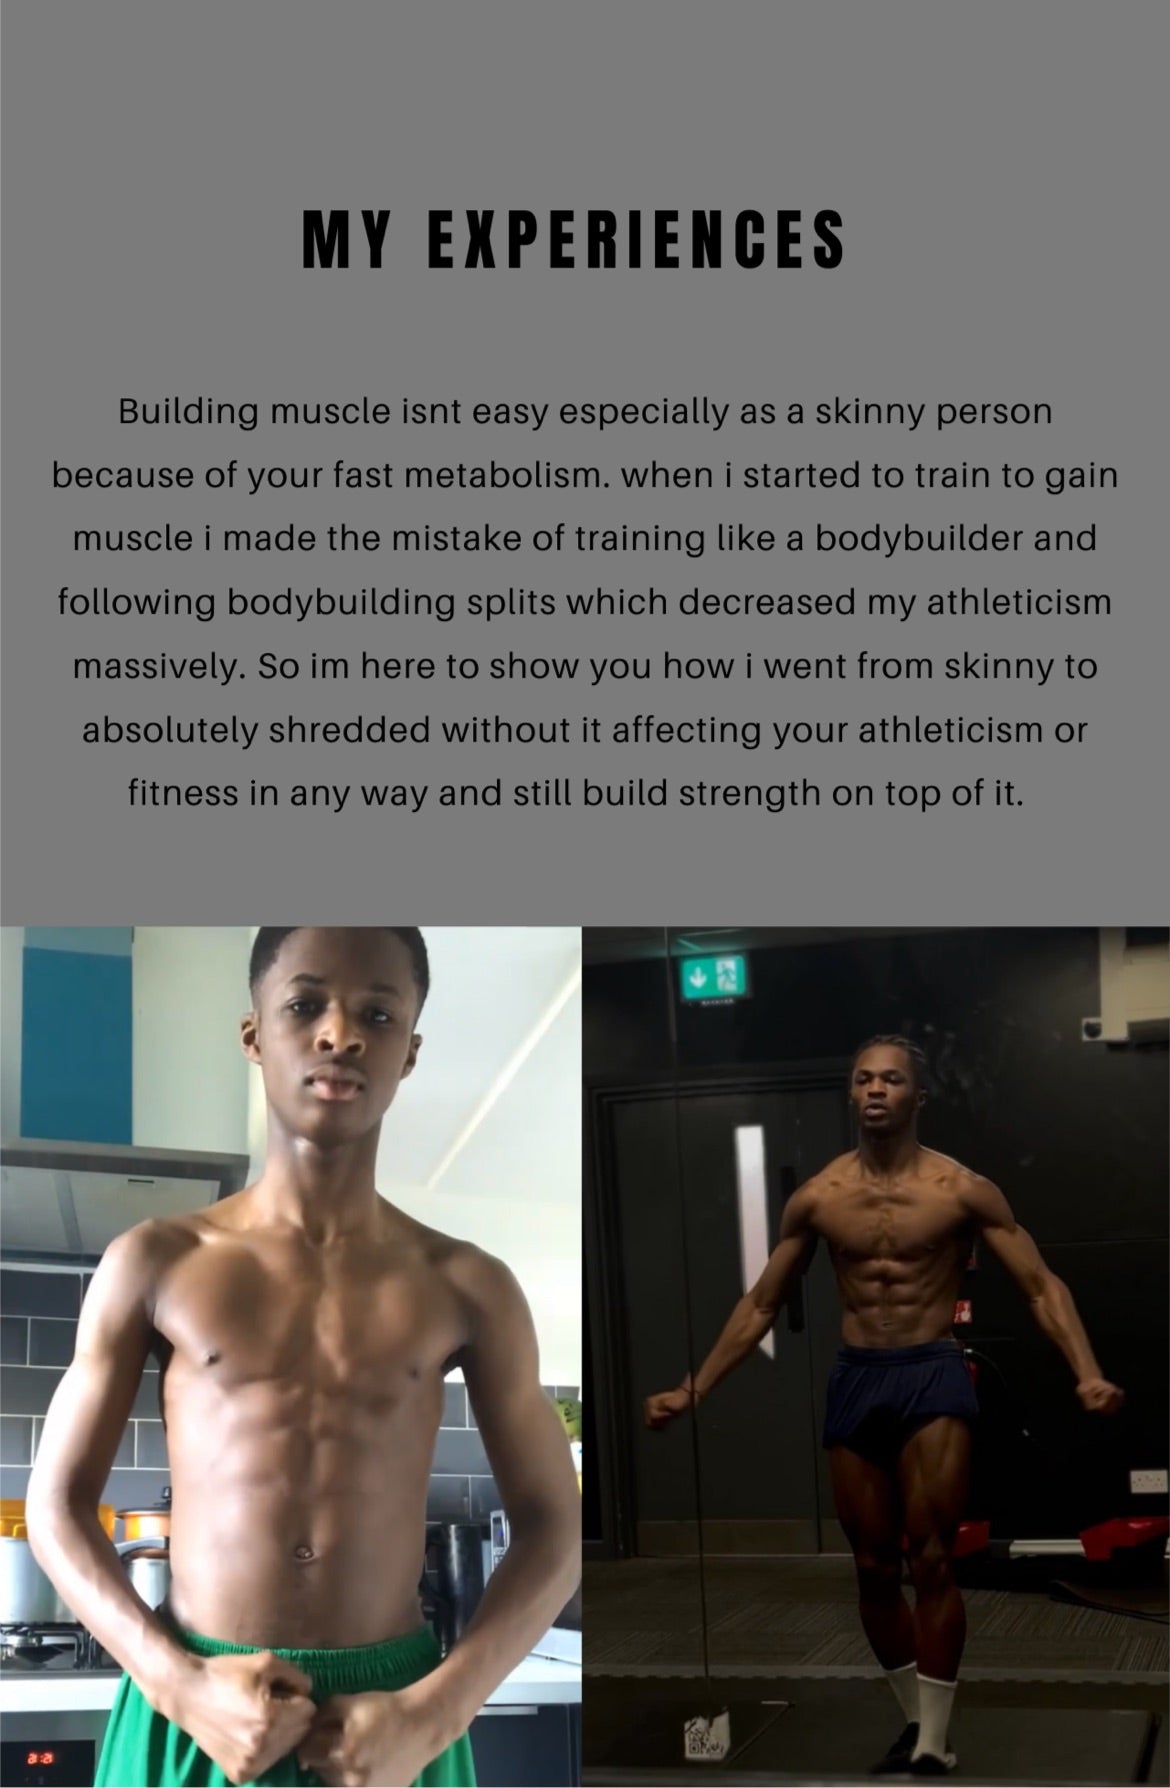 Athlete Muscle Gain Gym Plan